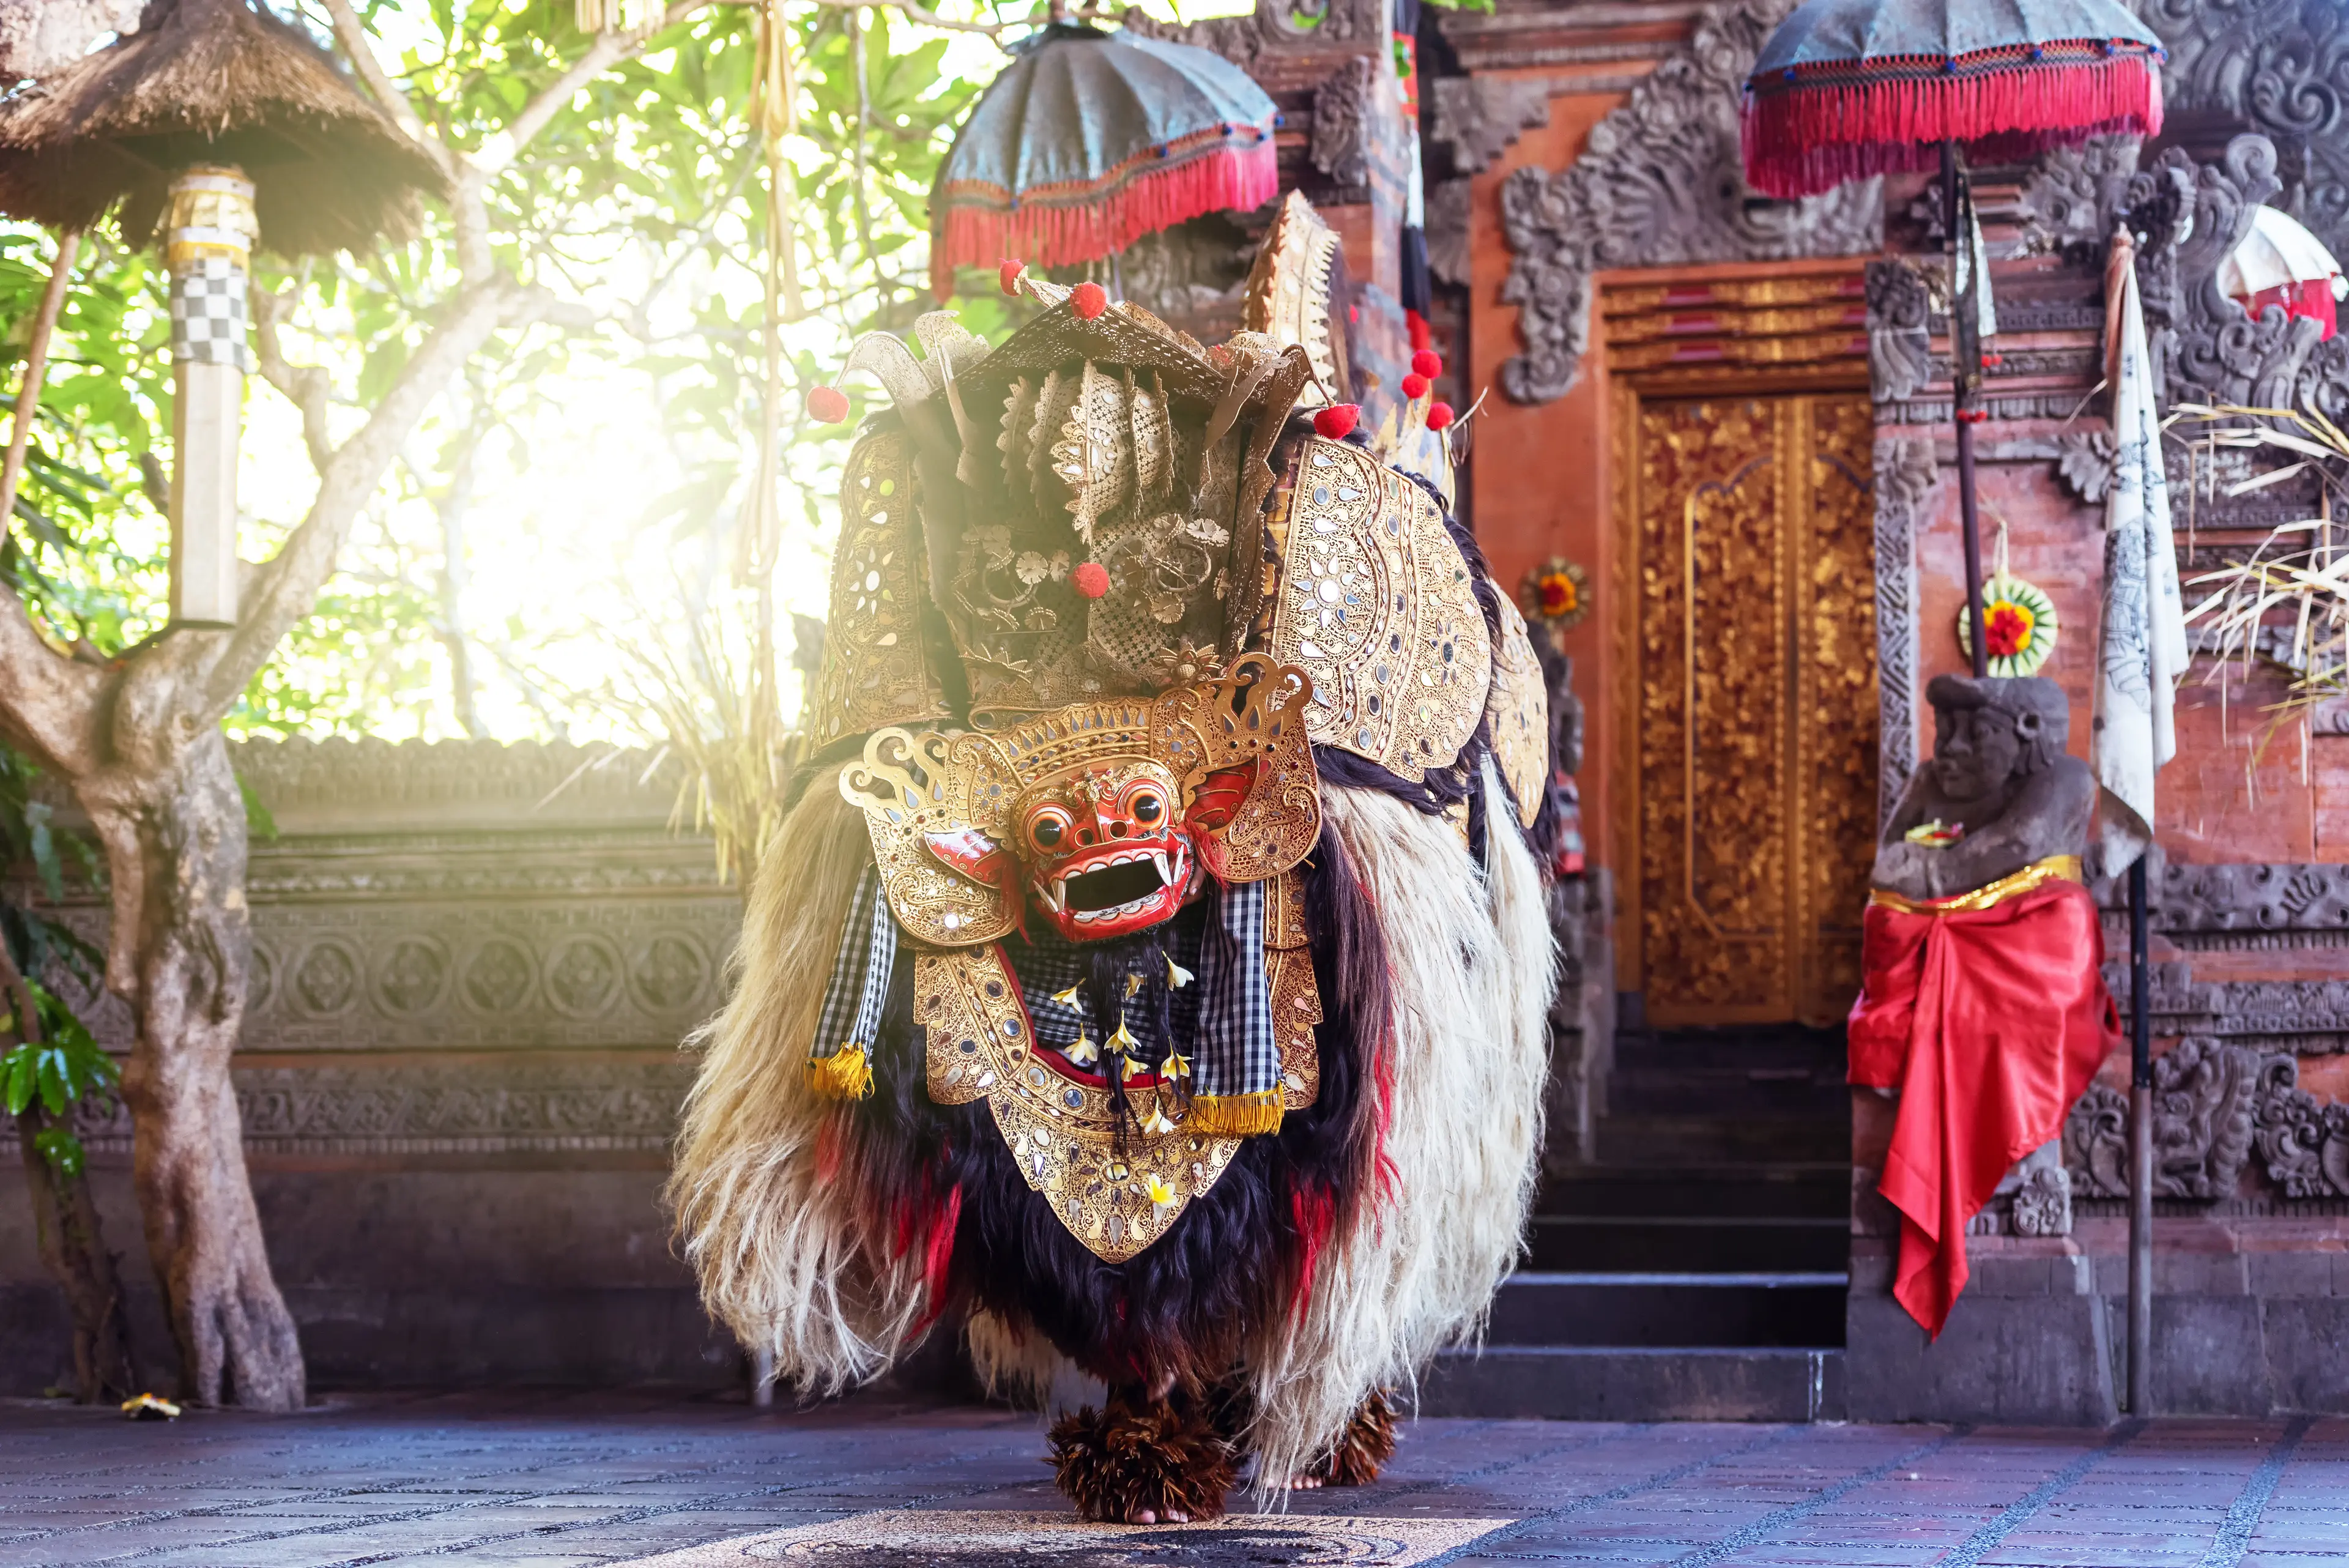 Balinese dance performances